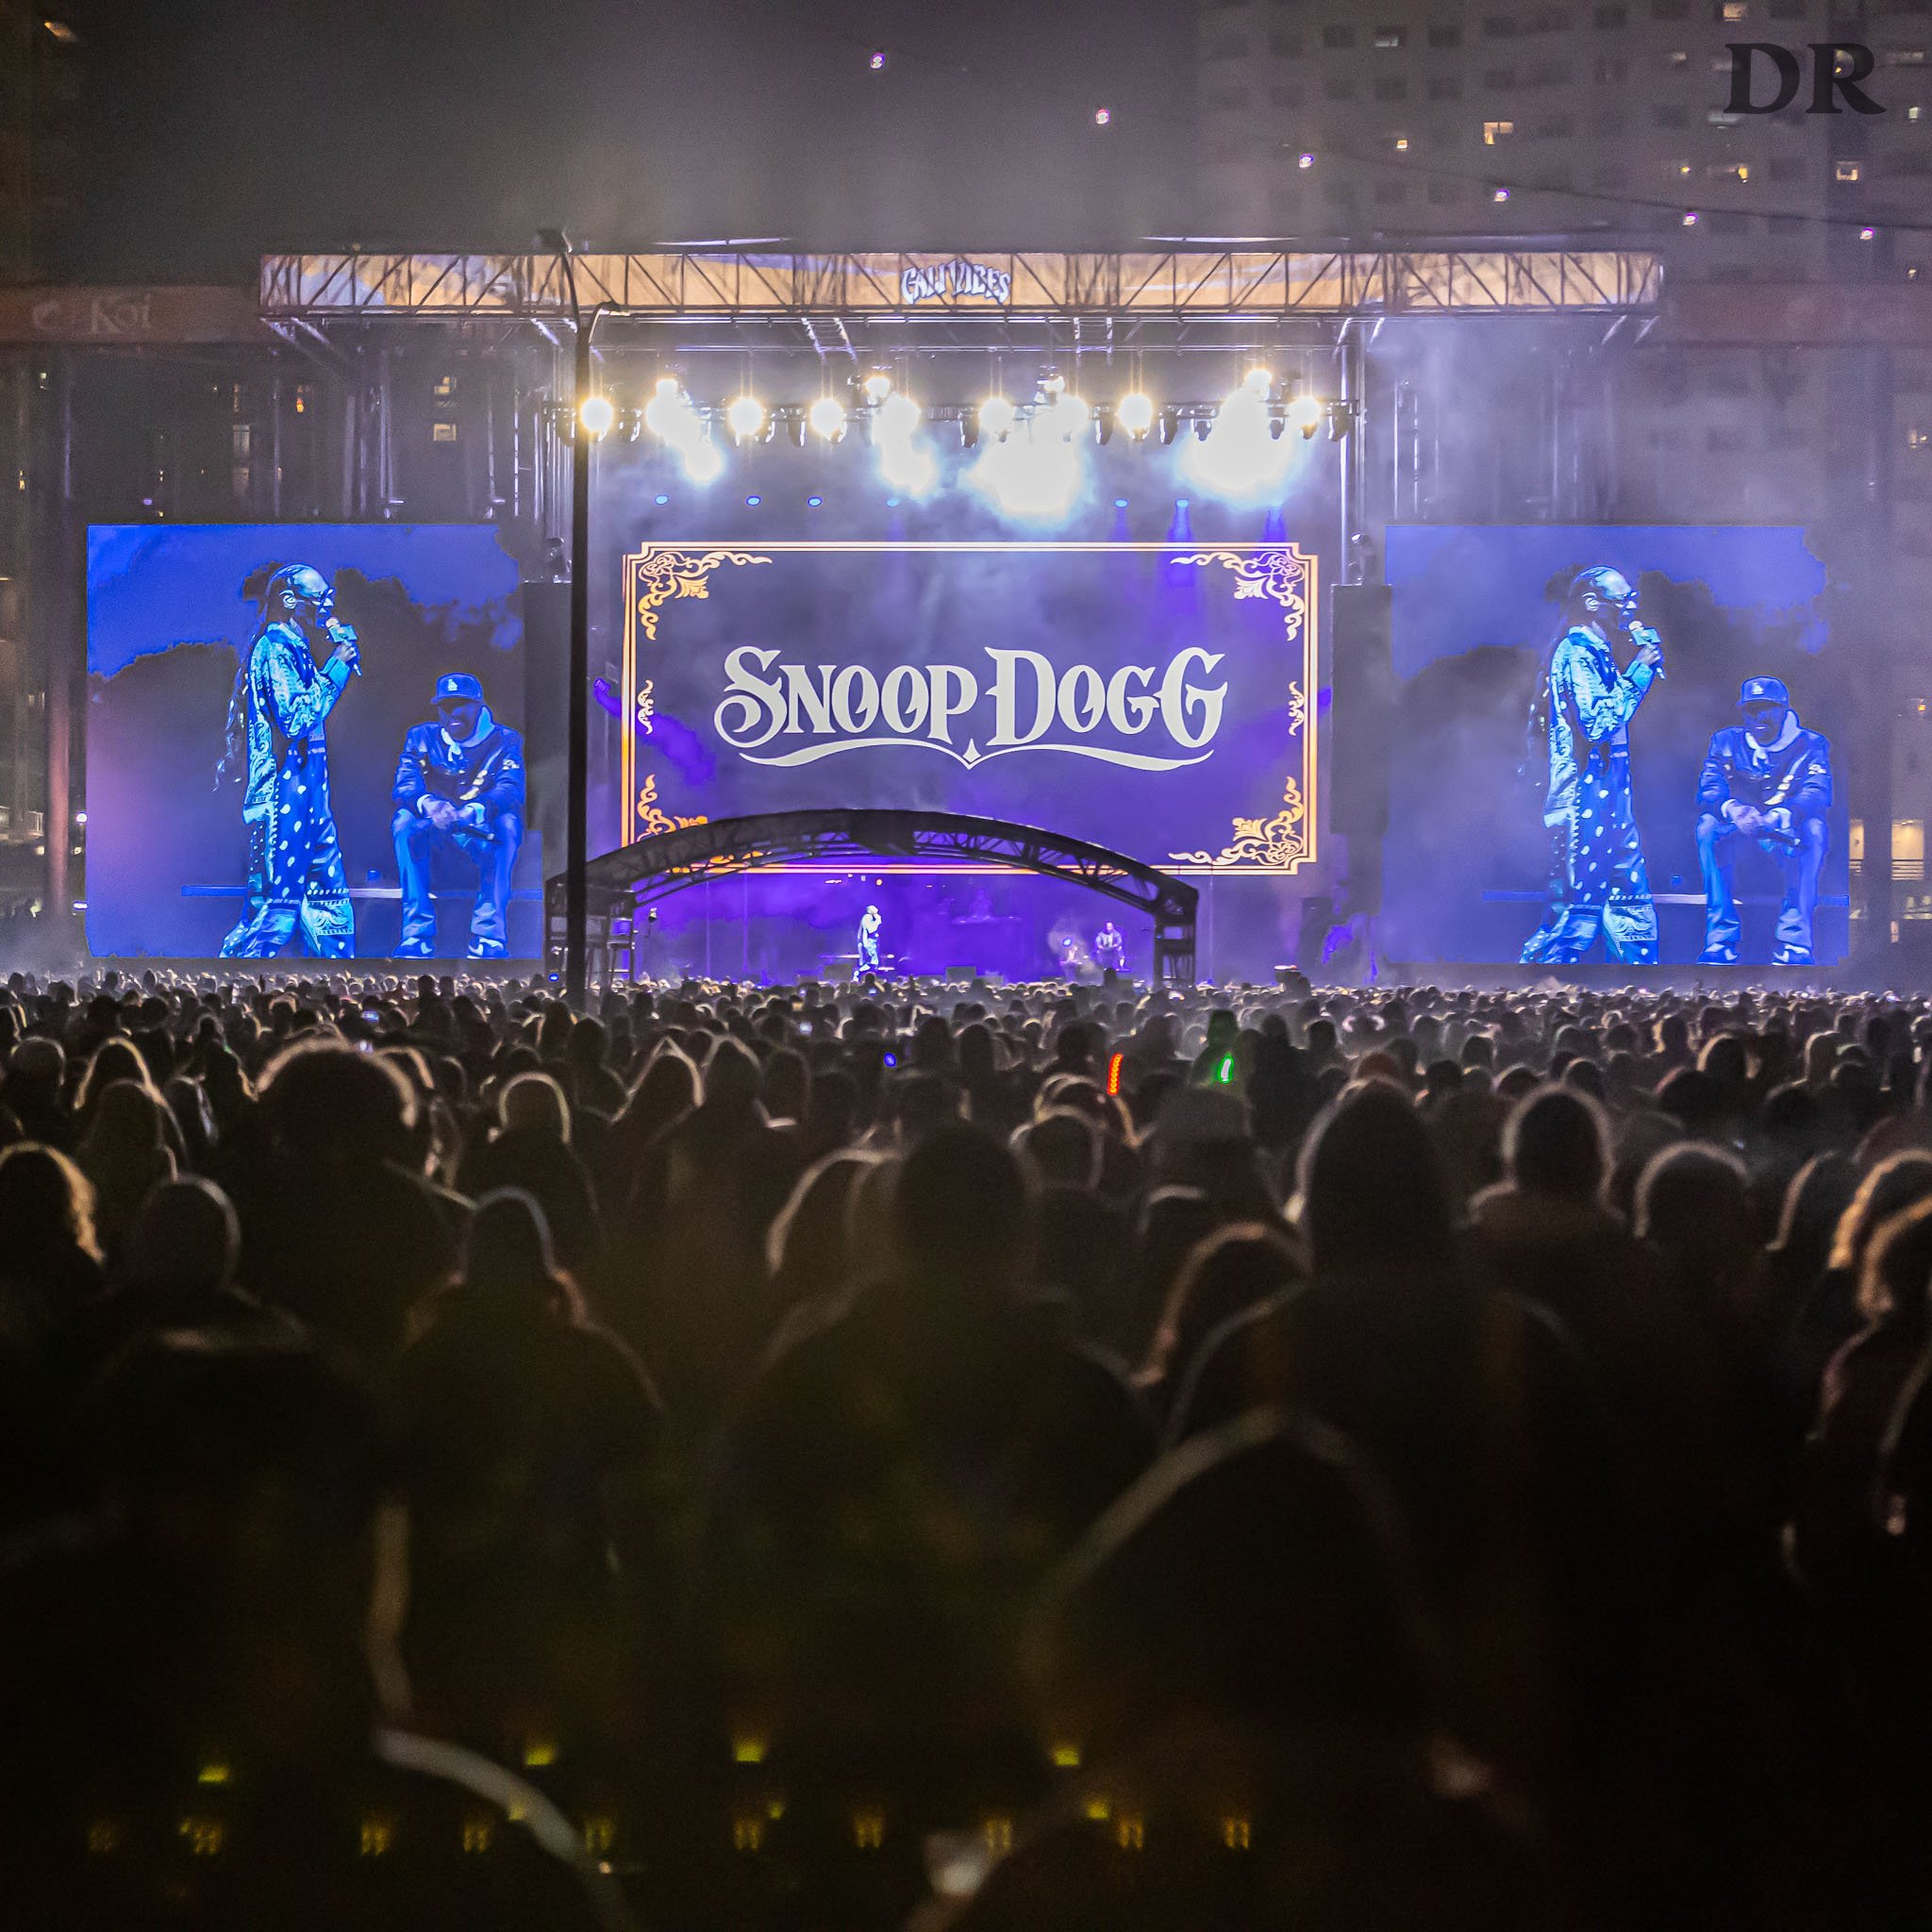 9 - Snoop Dogg with Crowd.jpg